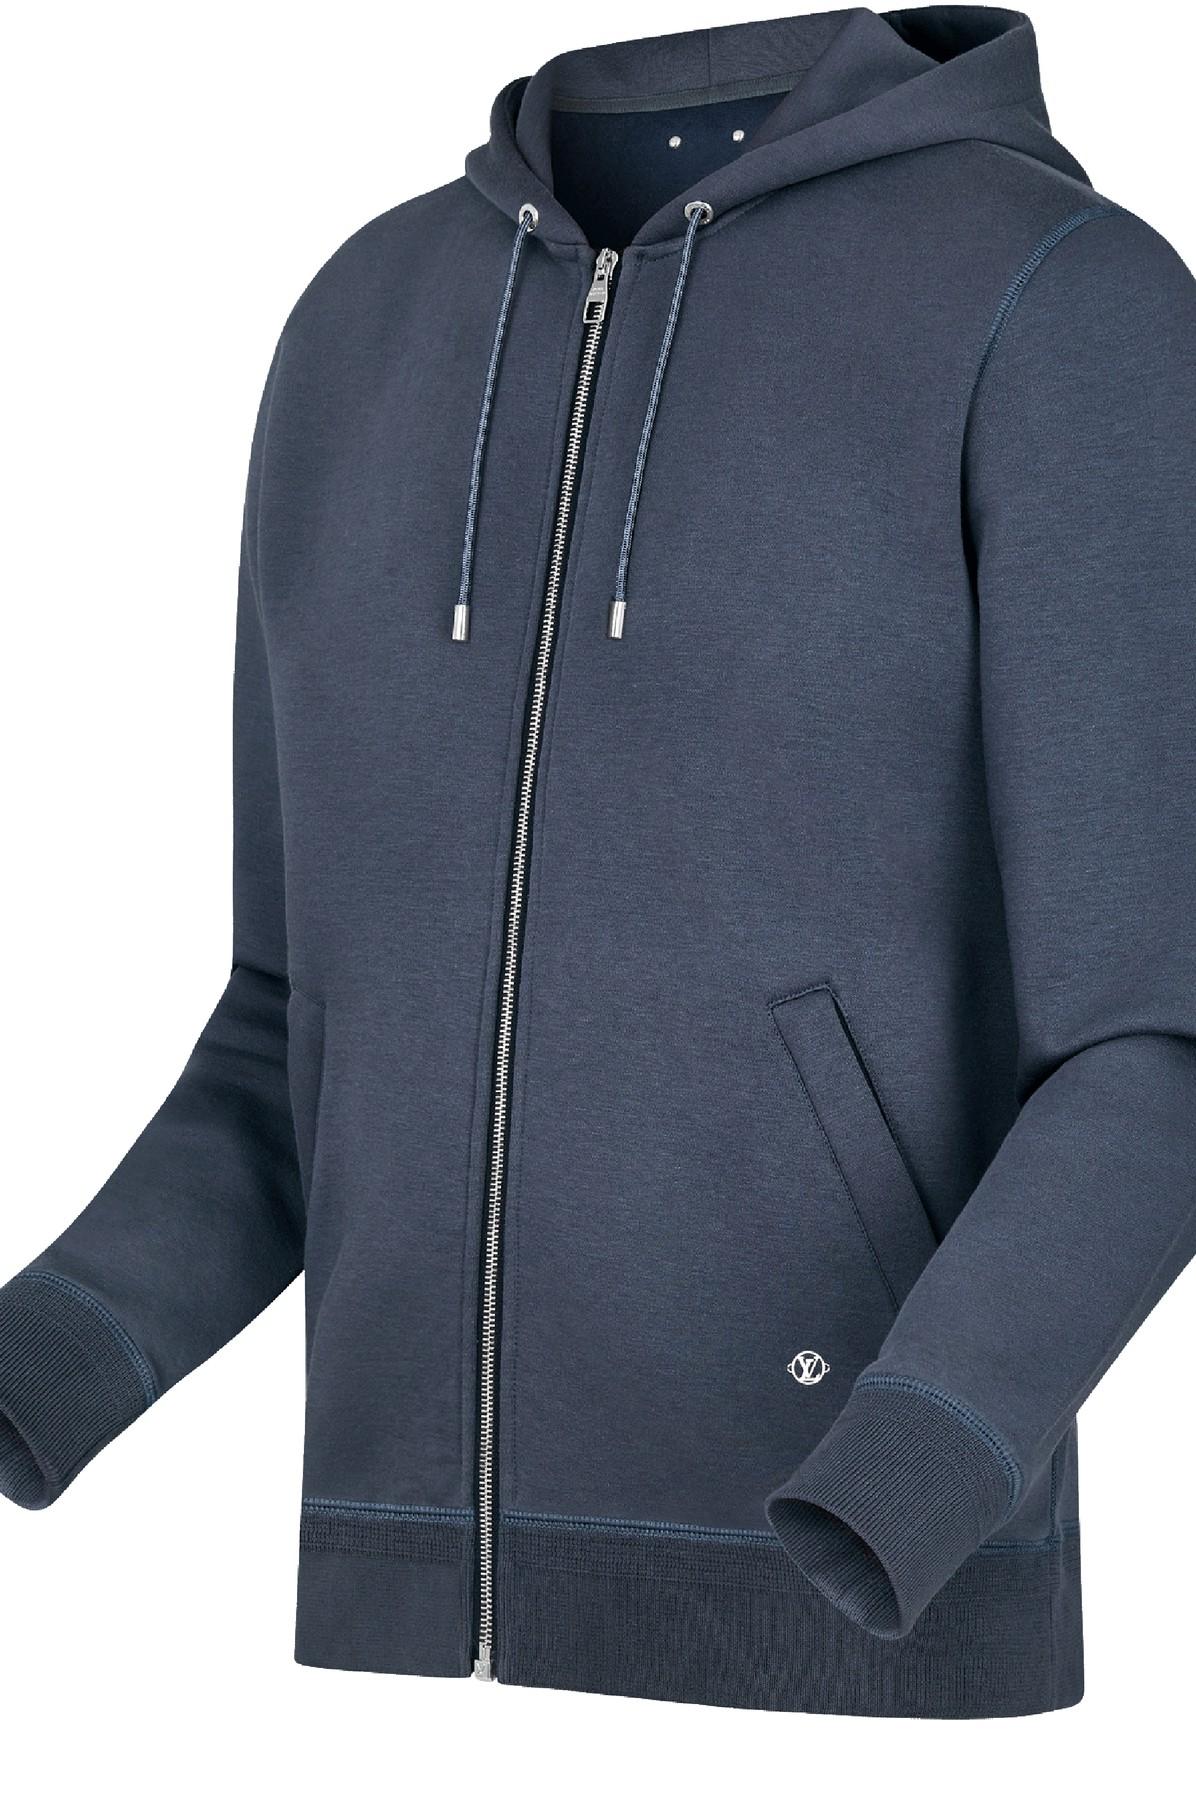 Louis Vuitton Hoodies & Sweatshirts for Men for sale